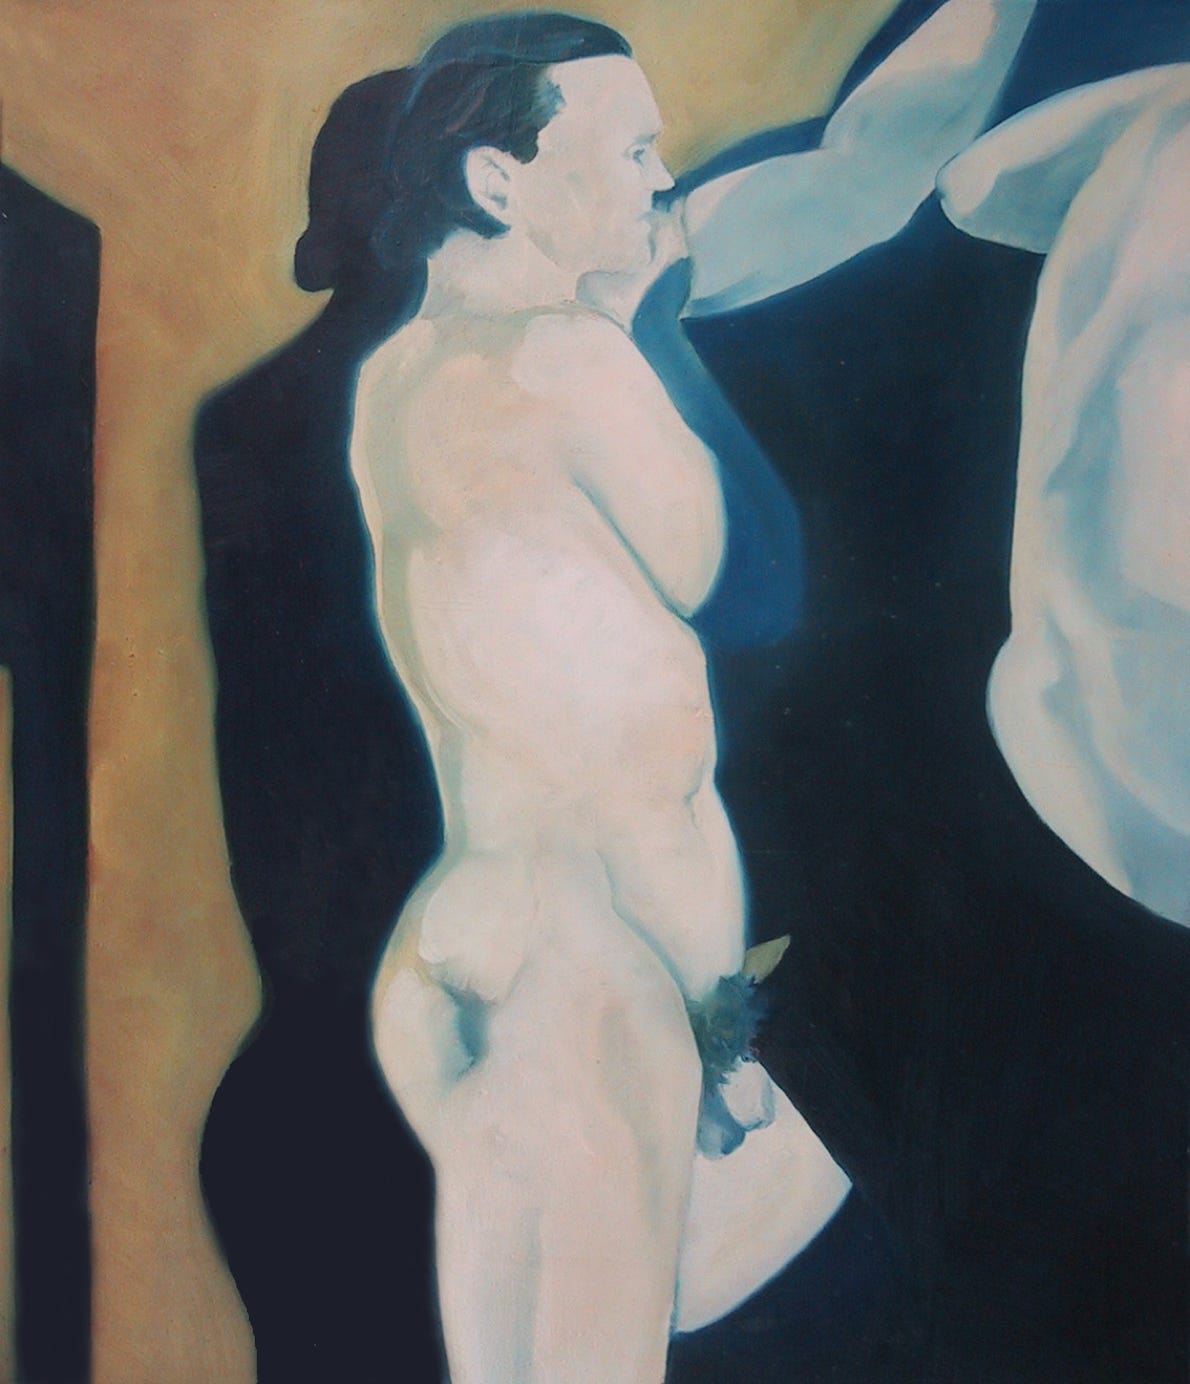 70x60 cm, oil on canvas, 1995